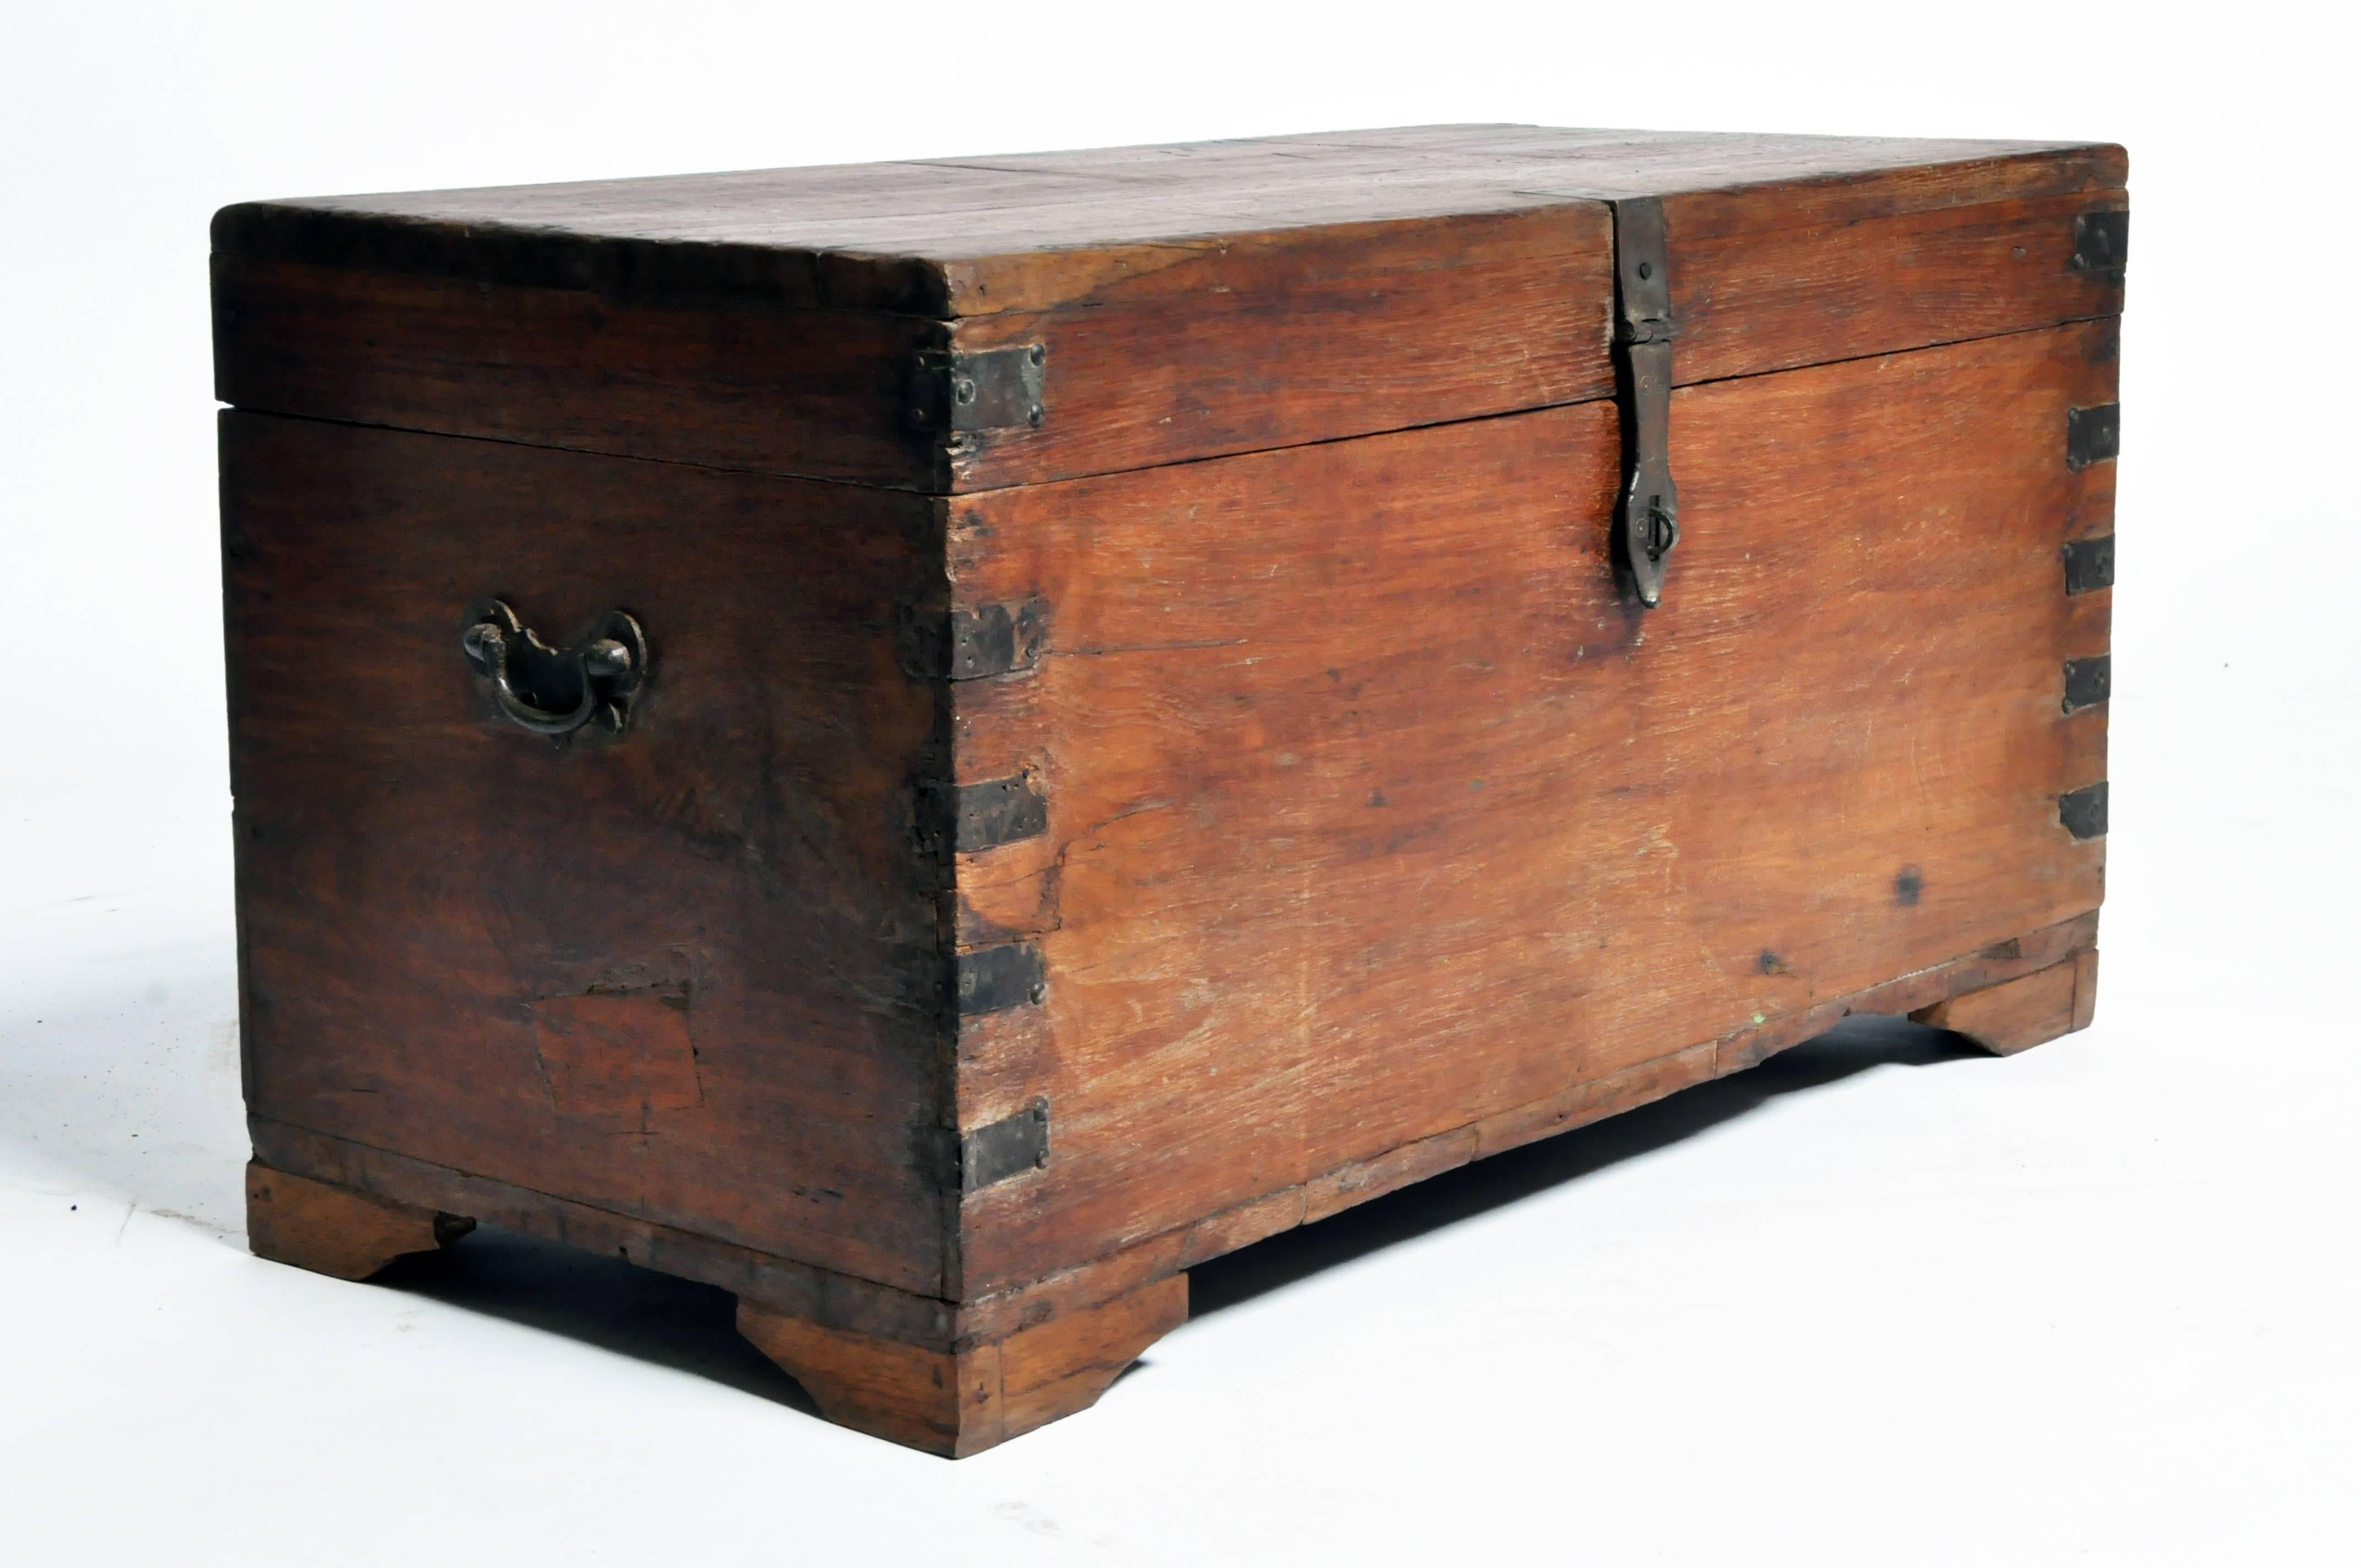 20th Century Wooden Storage Box with Metal Trim